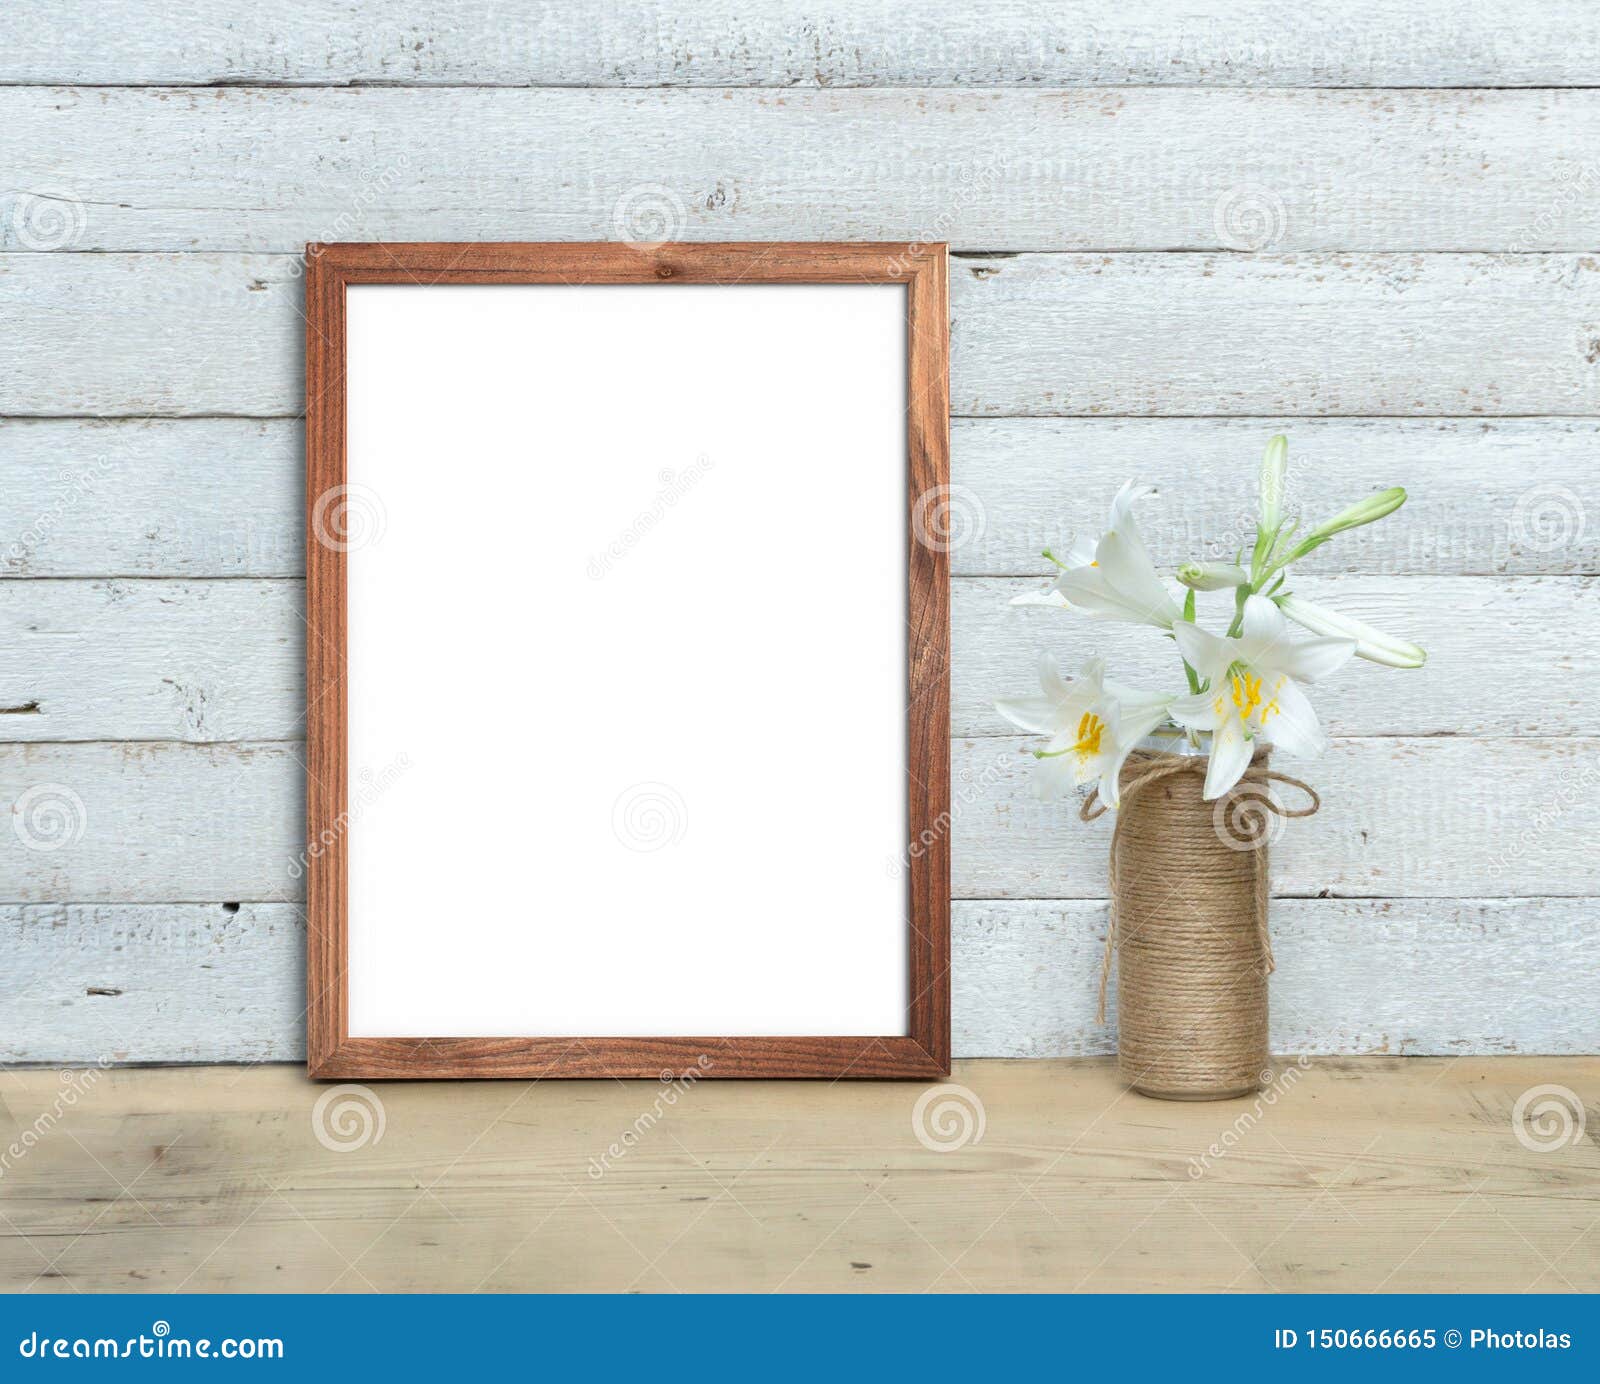 horizontal and vertical white frame mockup collection wooden desk mockup